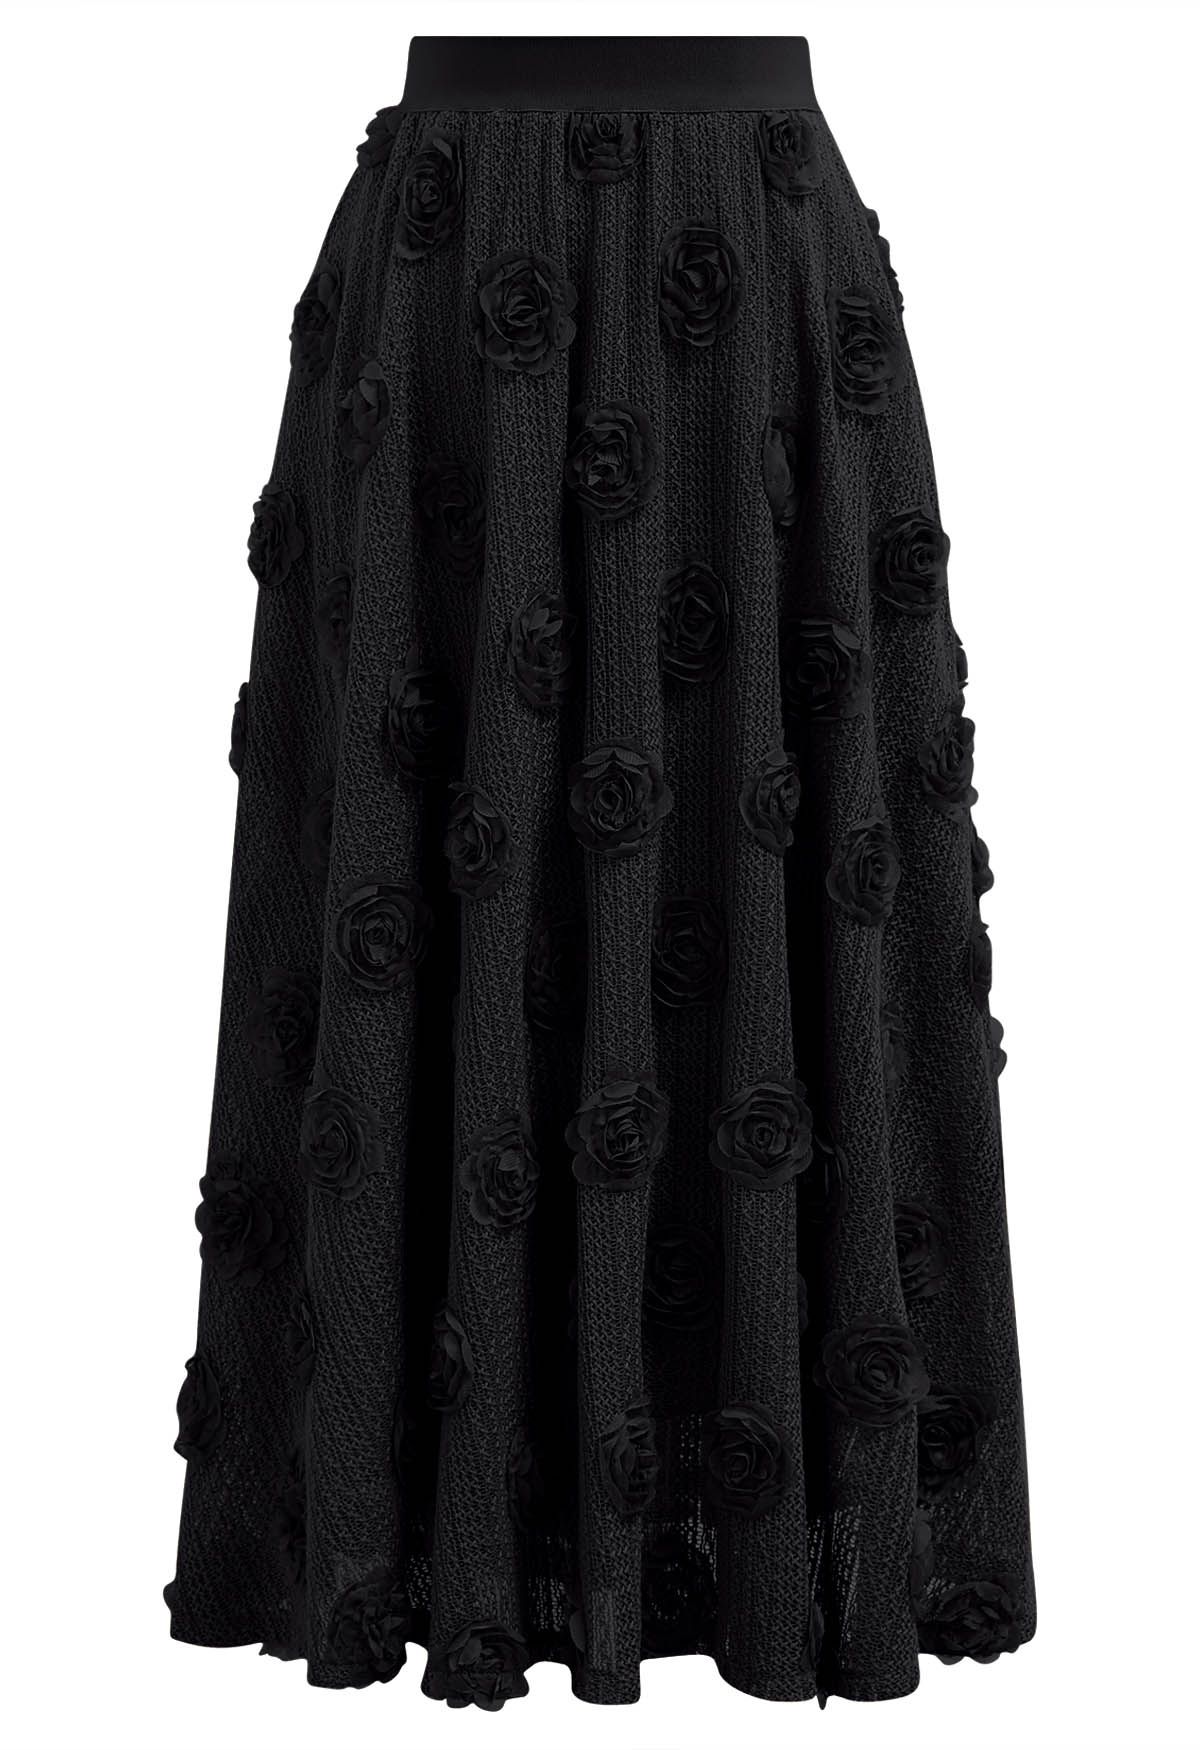 3D Rose Openwork Cotton Midi Skirt in Black